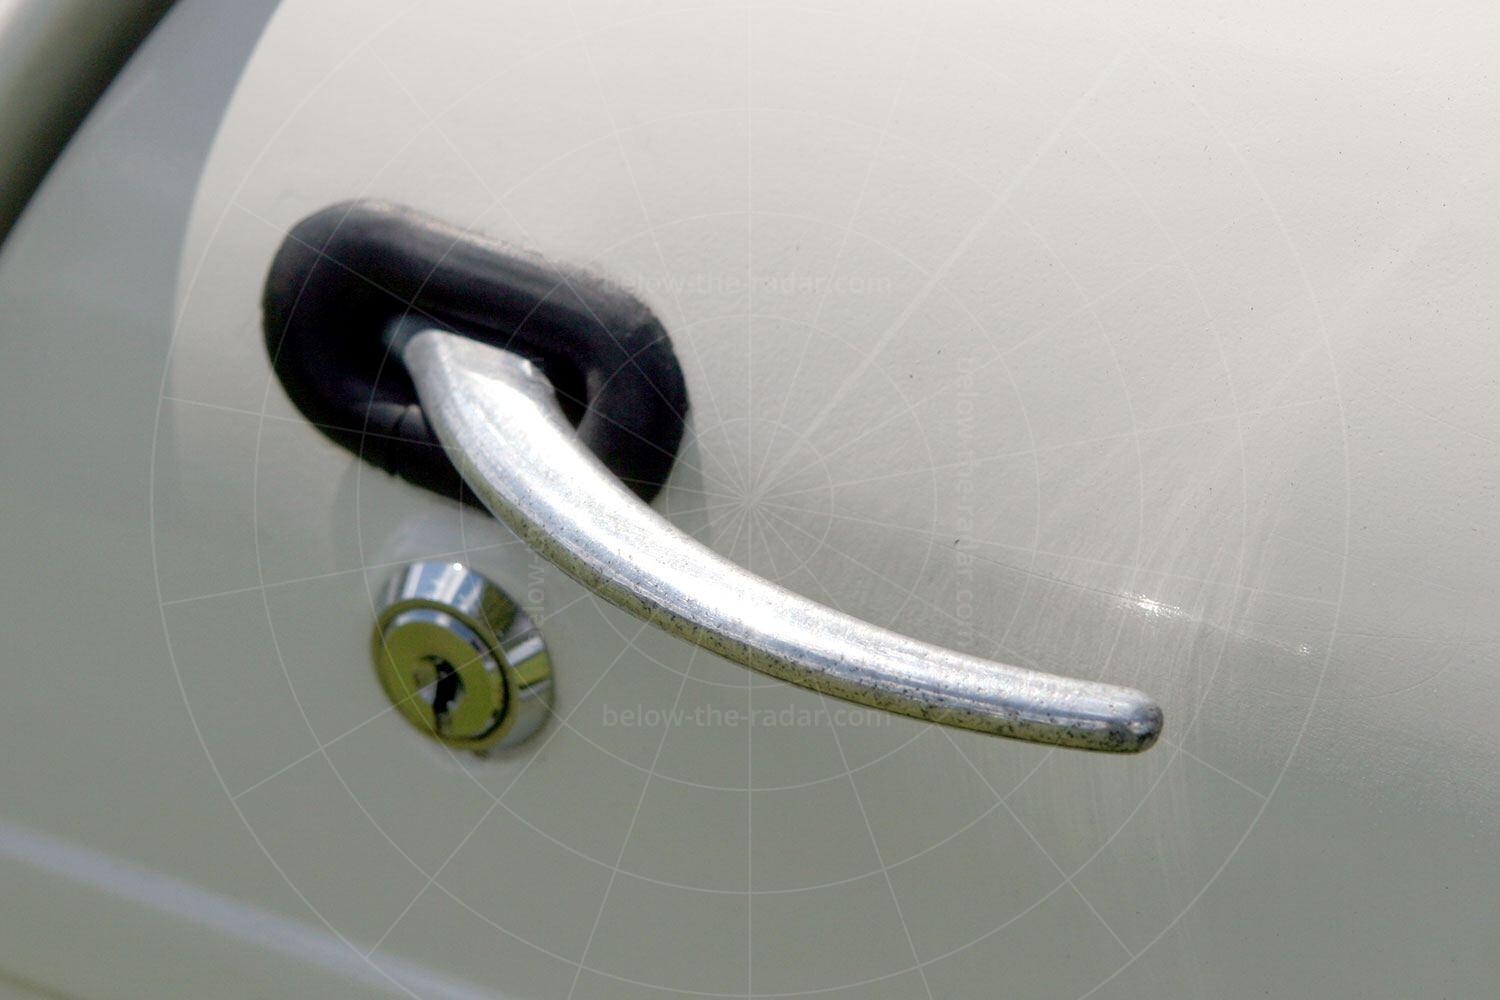 Vespa 400 door handle Pic: magiccarpics.co.uk | Vespa 400 door handle